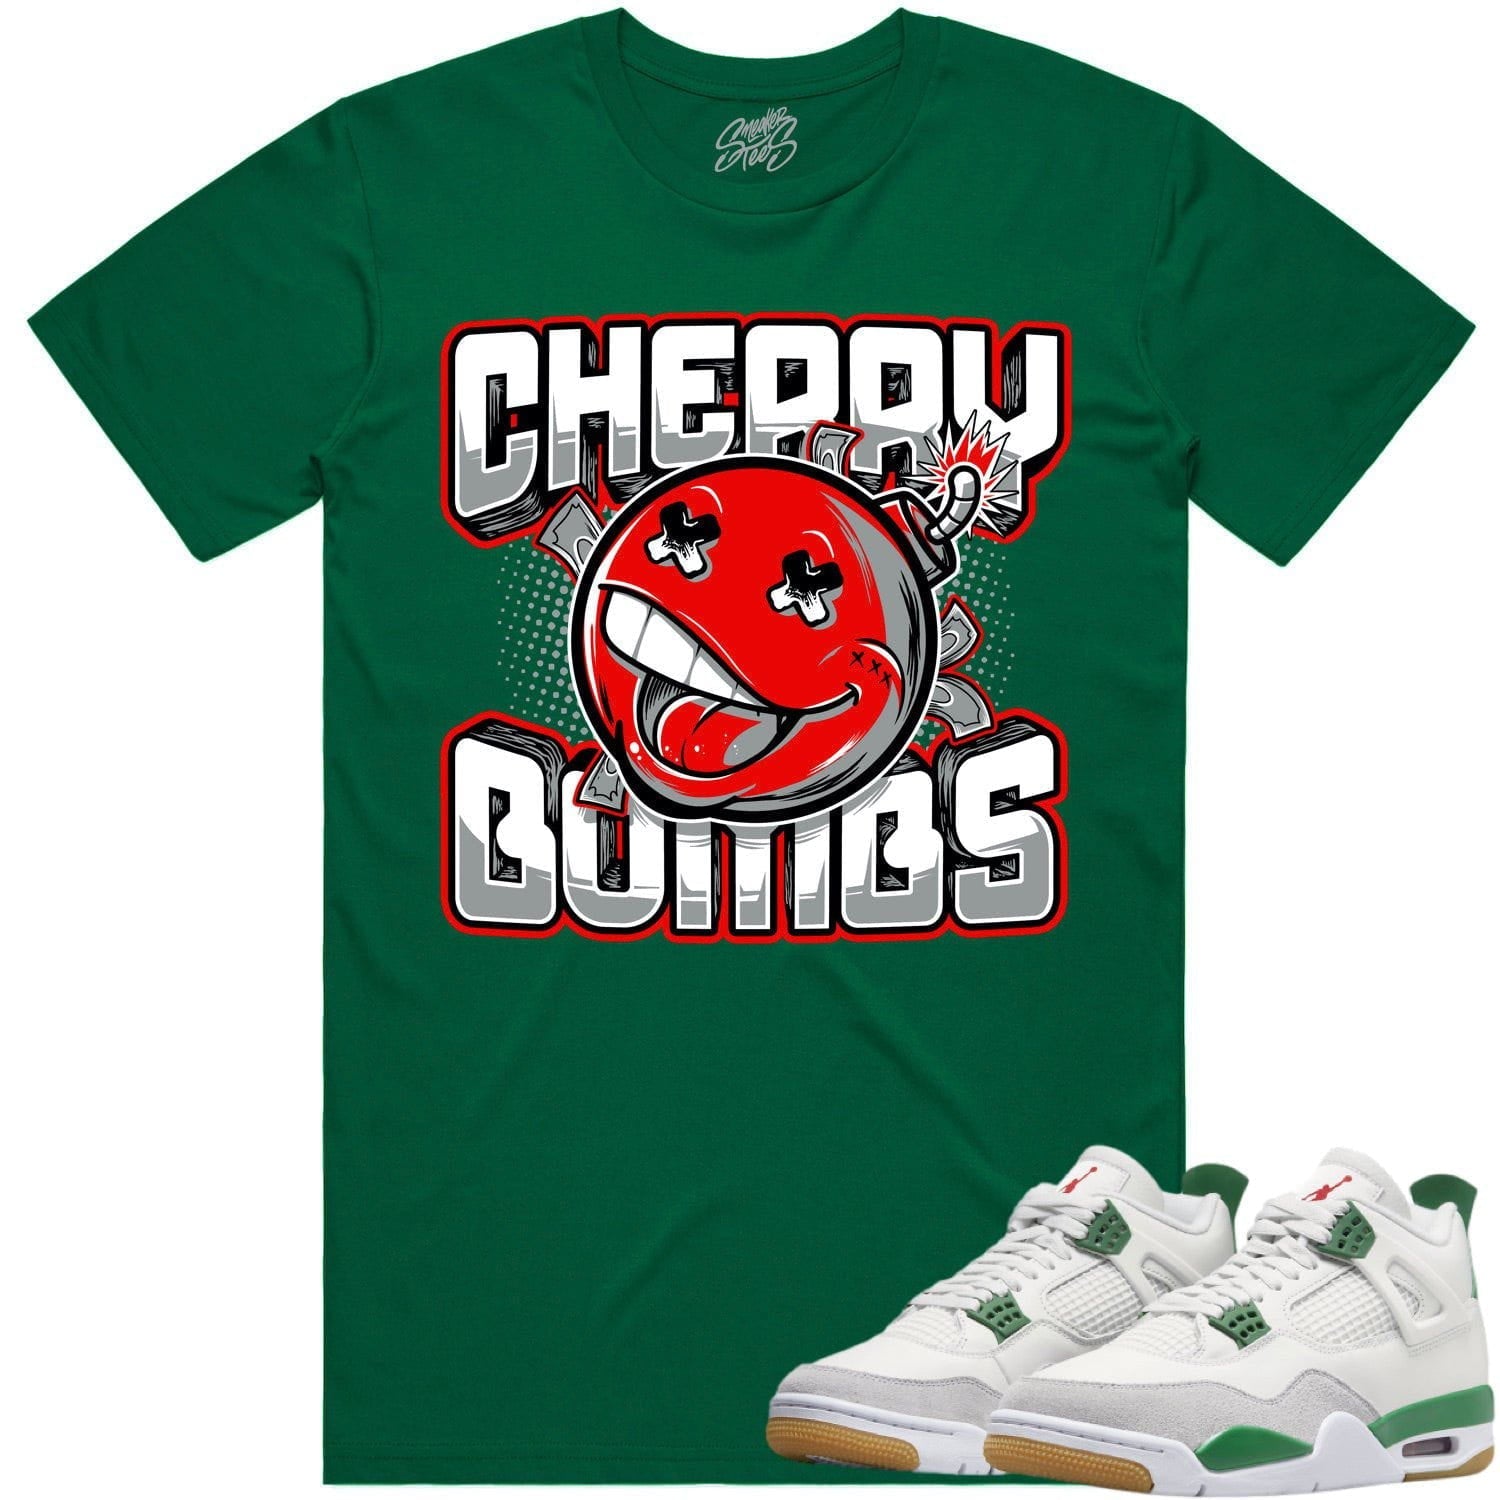 Pine Green 4s Shirt - Jordan 4 Pine Green Shirt - Cherry Bombs